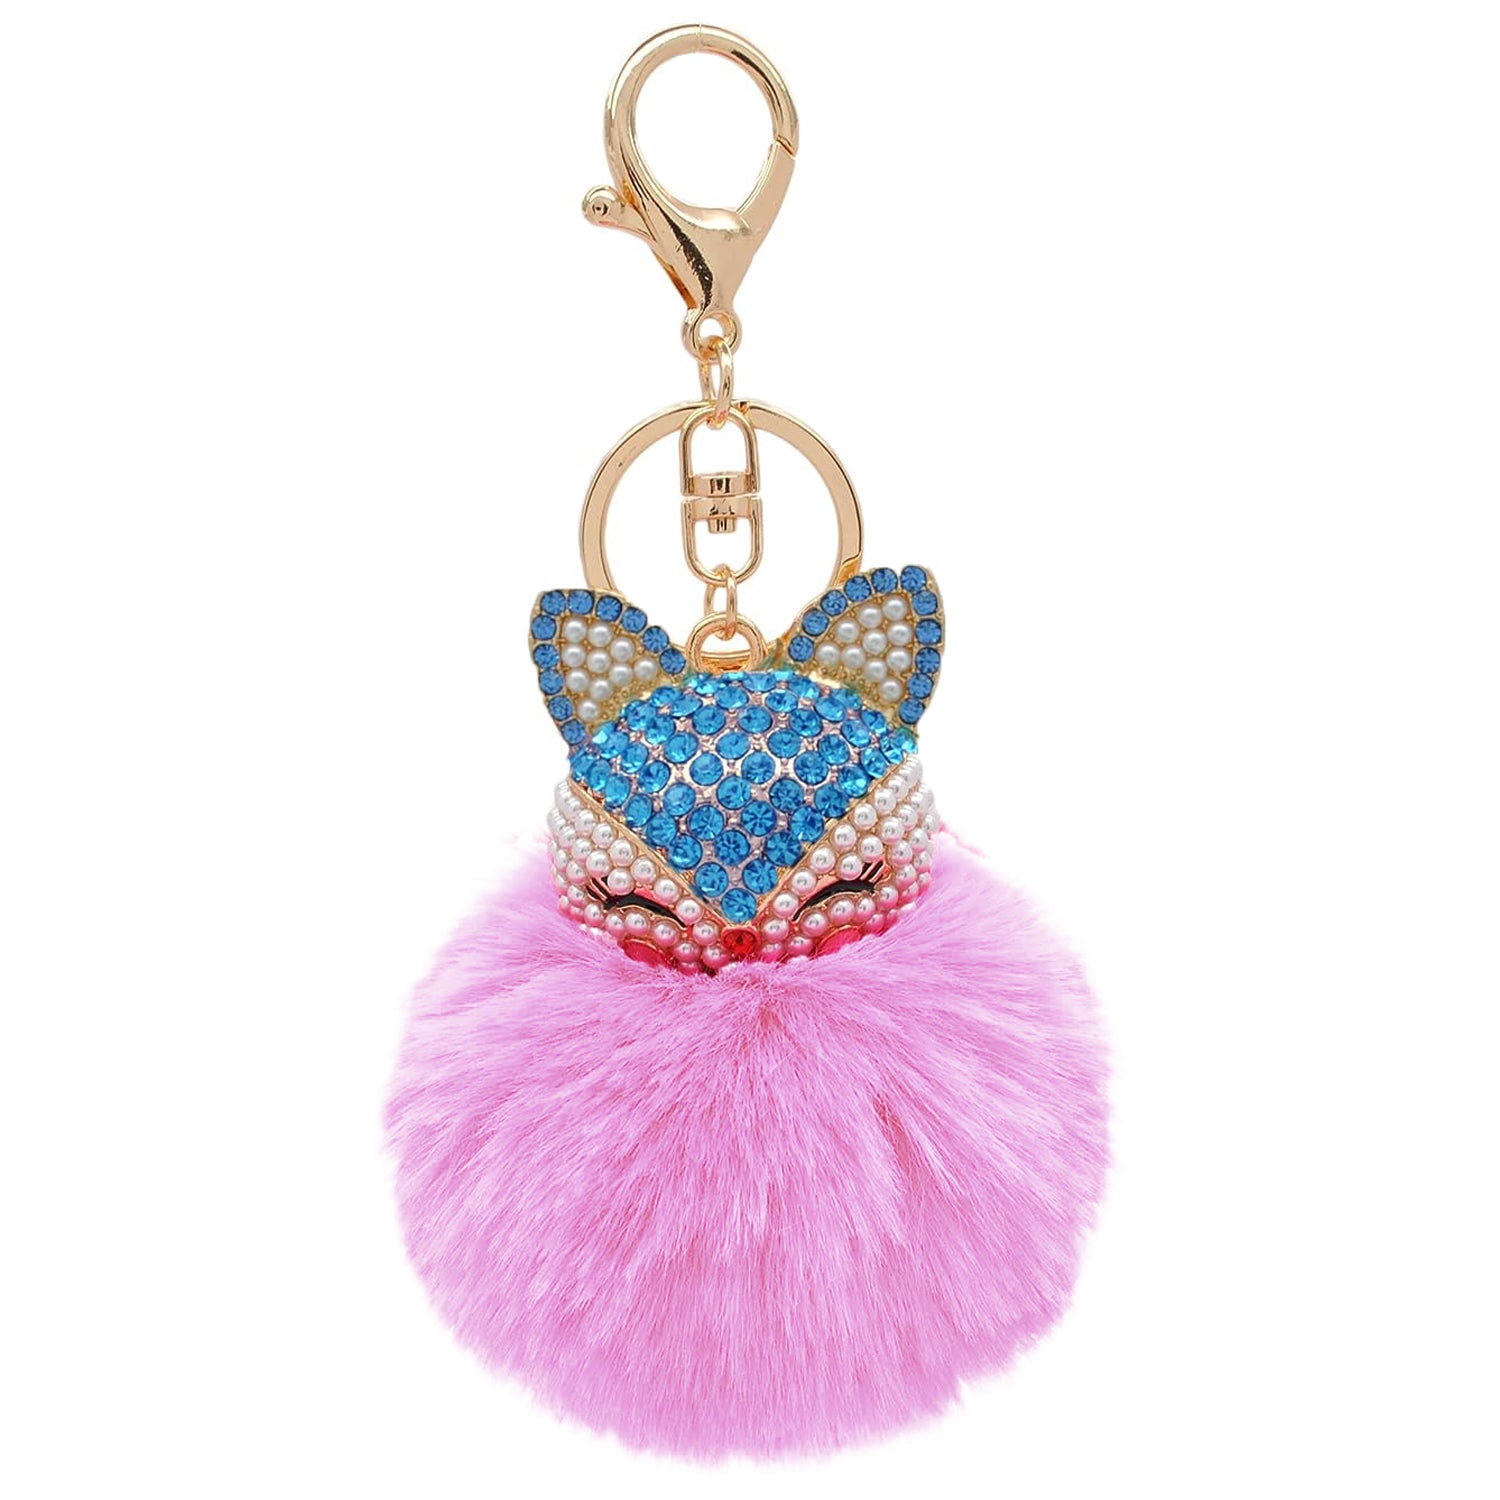 Nihaou Fashion Fox Faux-Fur Pom Pom Keychain